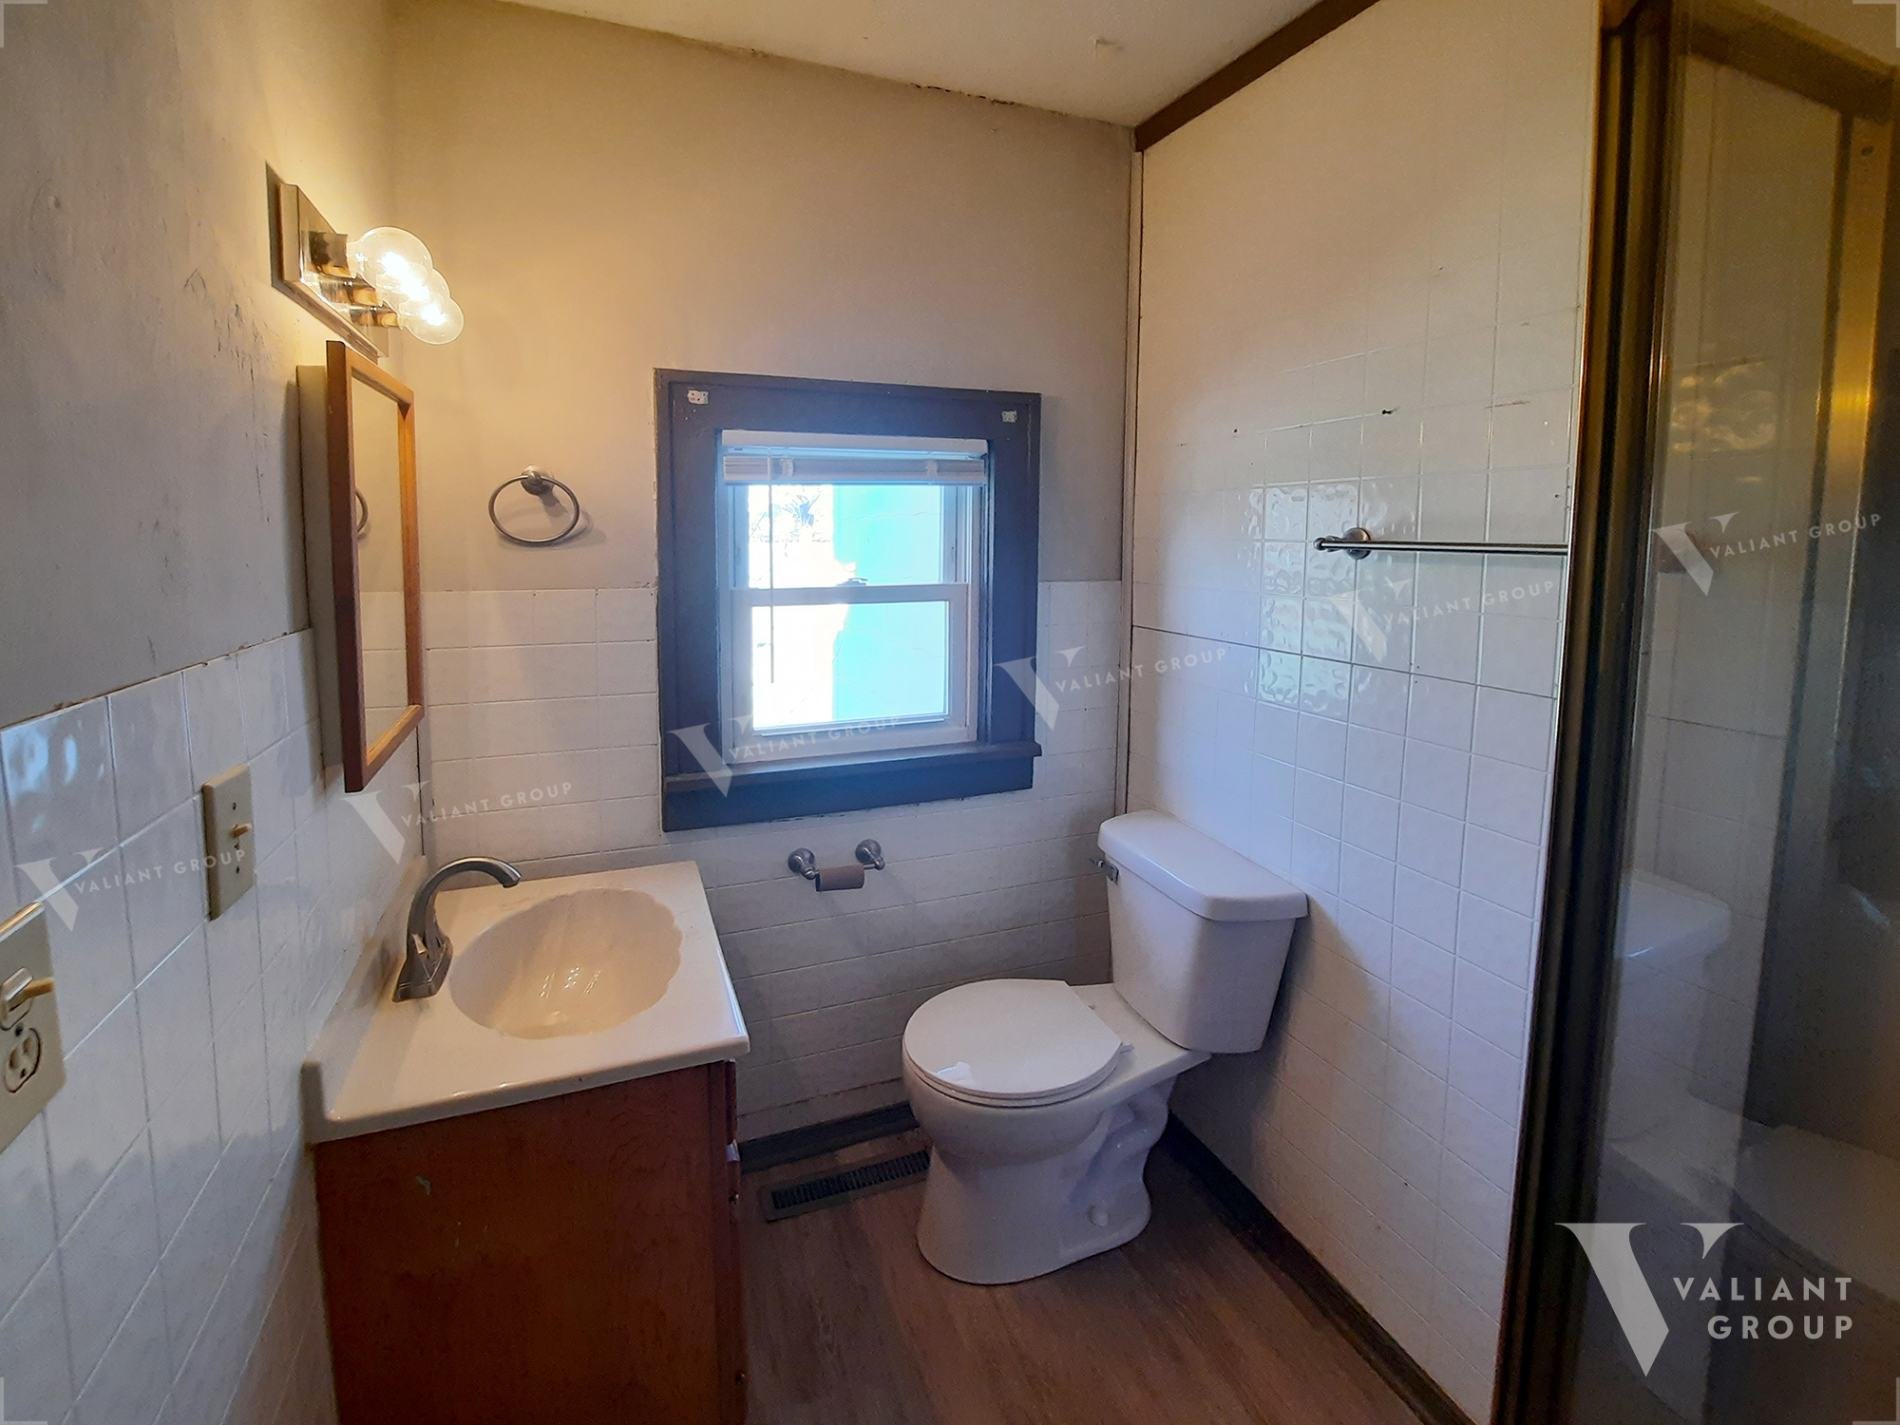 House-for-Rent-2223-W-Elm-St-Springfield-MO-12-Bathroom.jpg